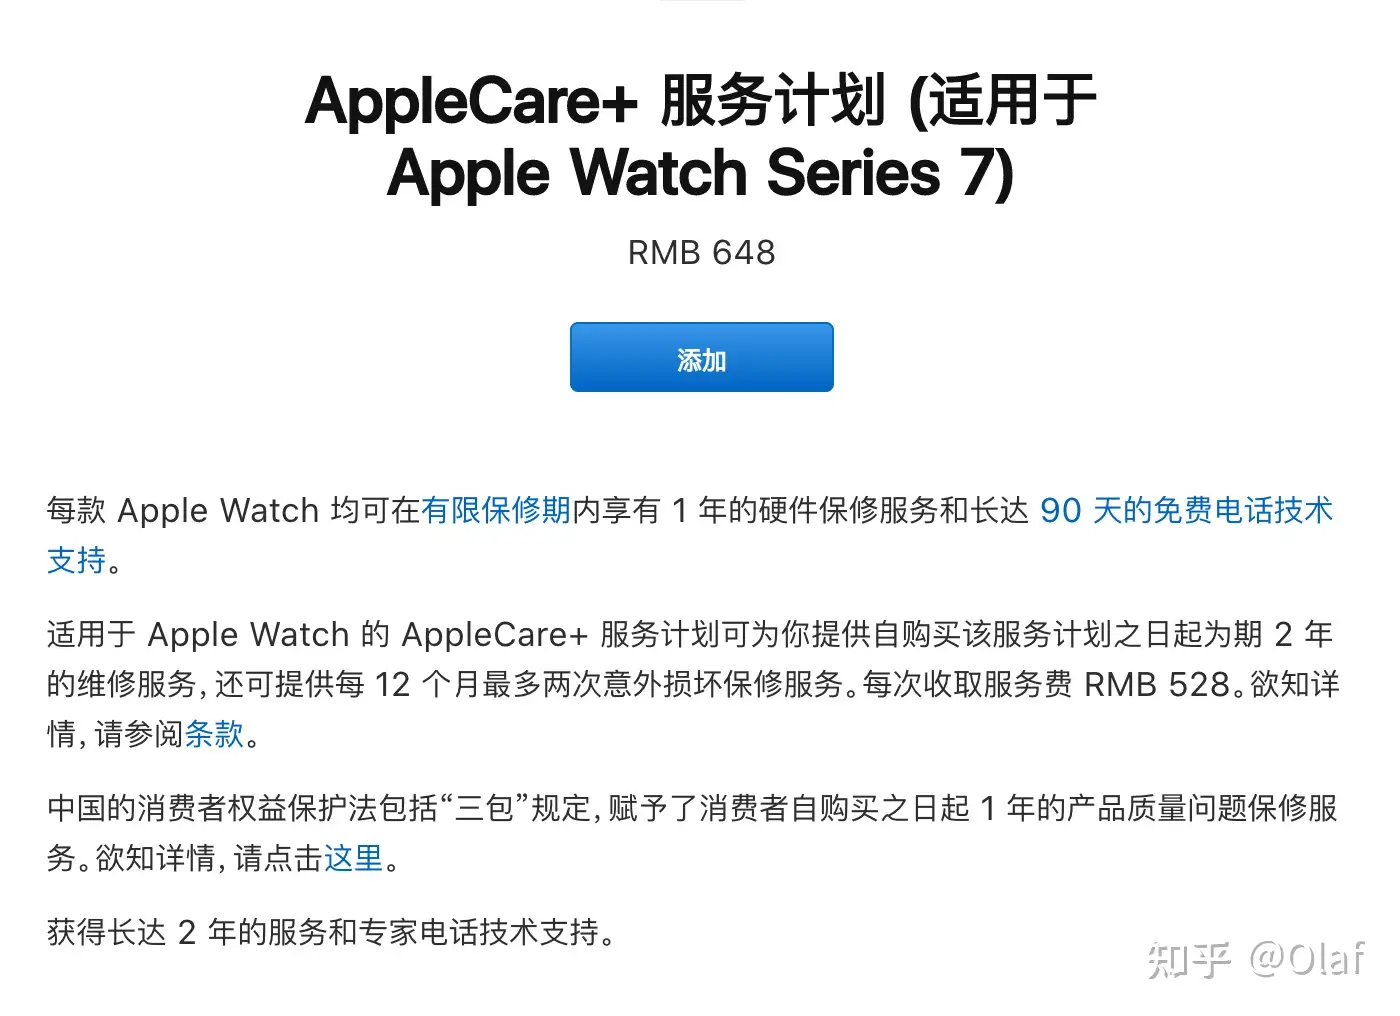 apple watch是否需要购买applecare+？ - 知乎